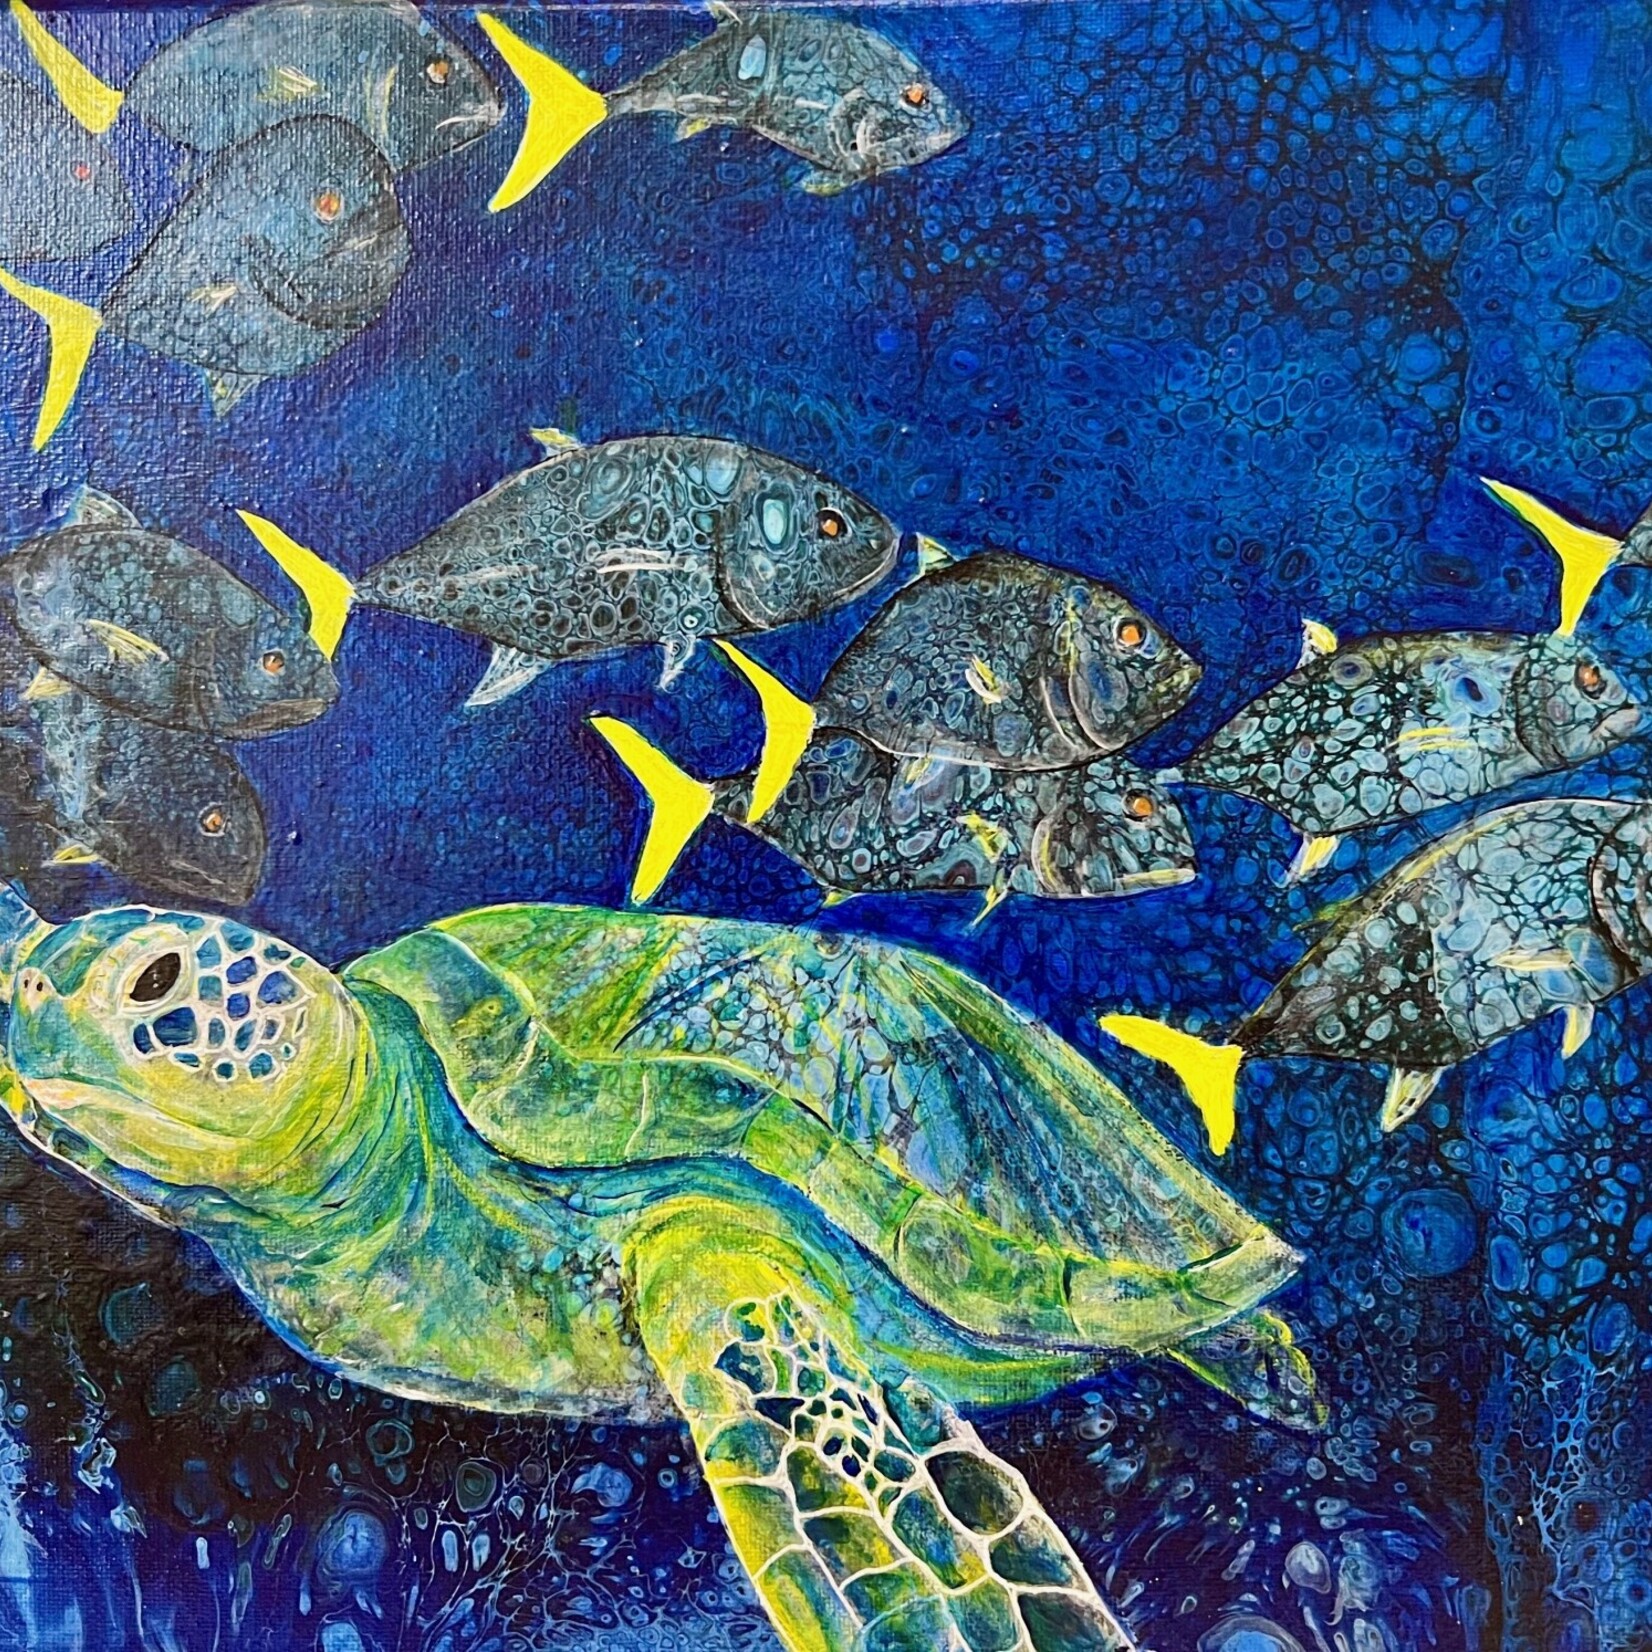 Fiori Ferraris Turtle in Cobalt Waters w/fish, original on GW canvas, 16x12", FIORI